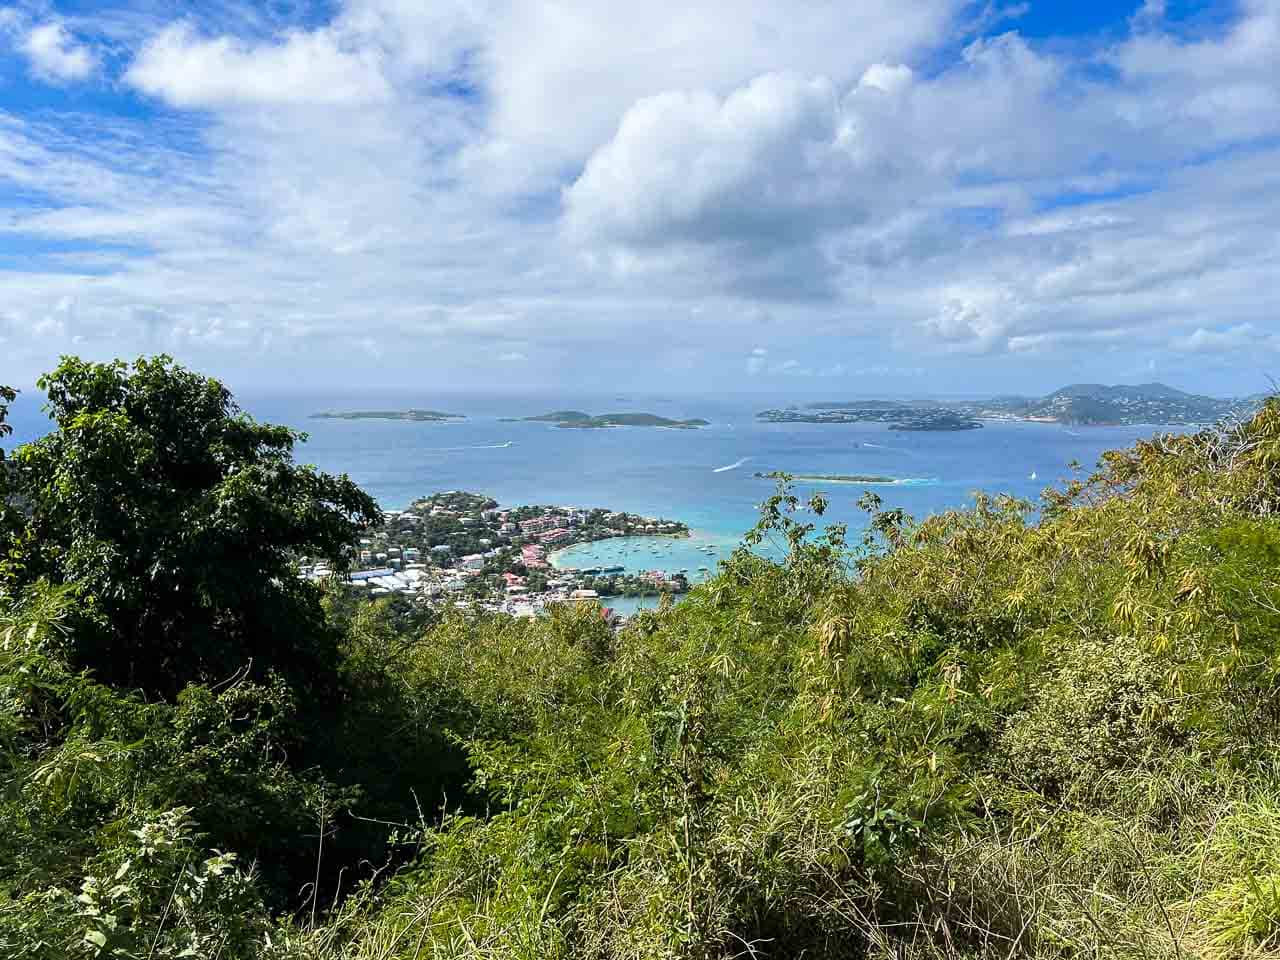 Cruz Bay seen from Caneel Hill in Virgin Islands National Park